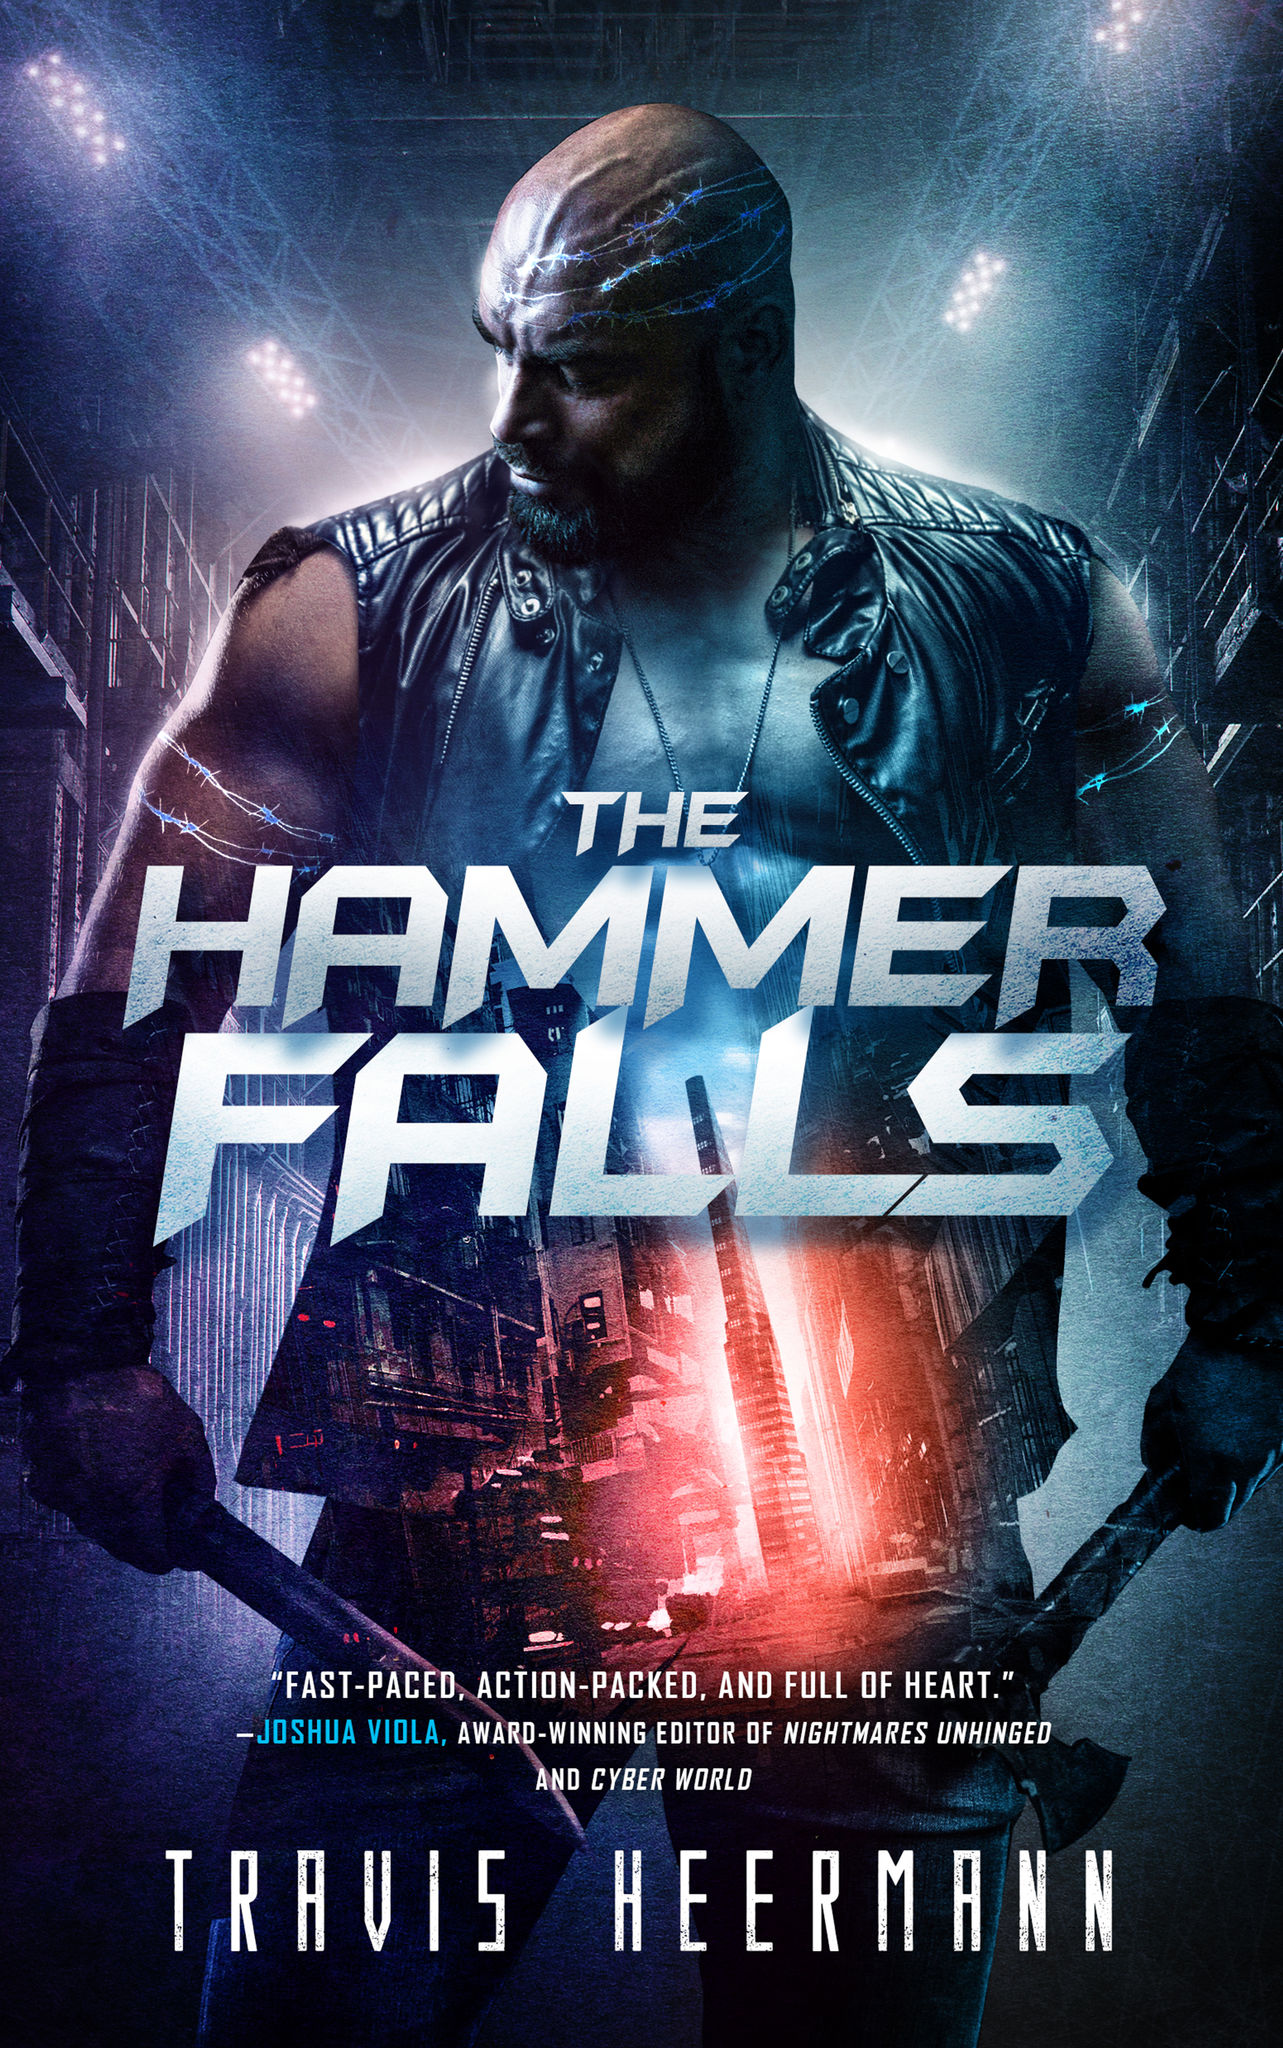 THE HAMMER FALLS